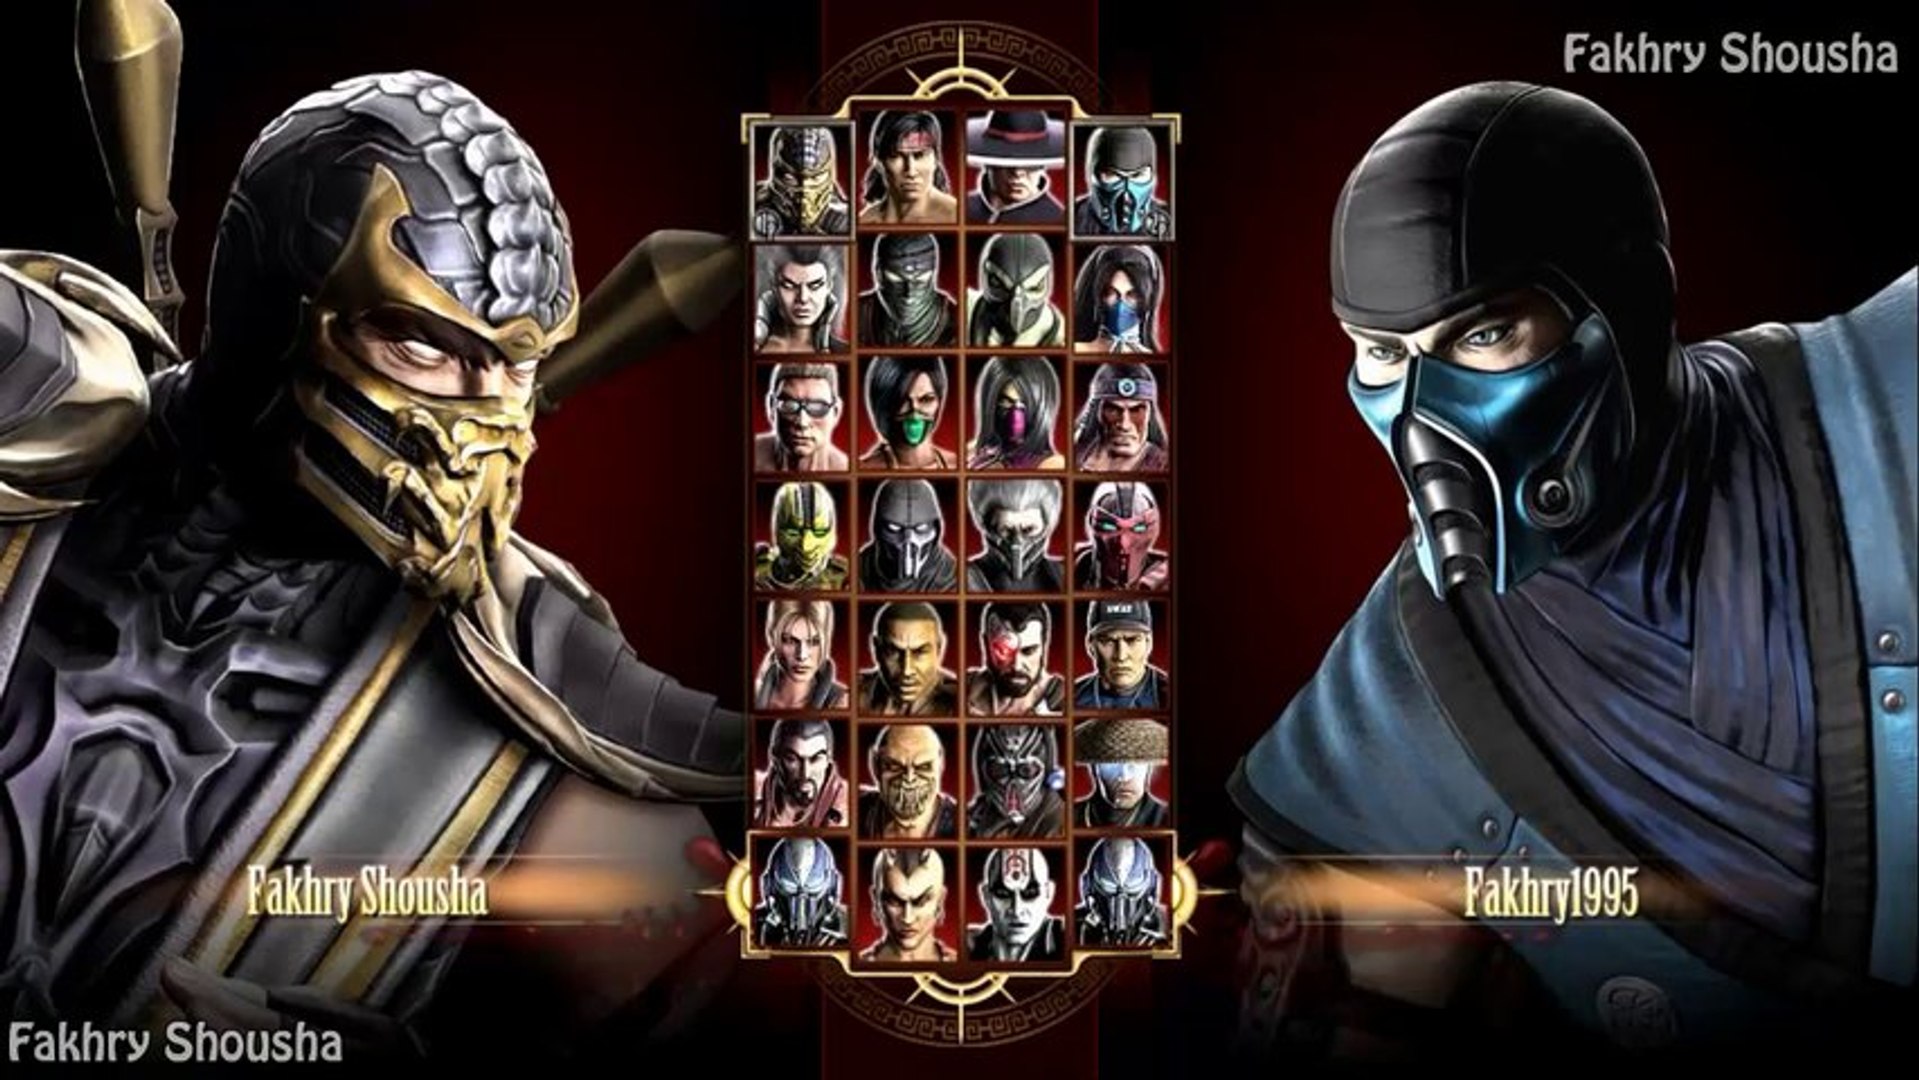 How To] Play Mortal Kombat Komplete Edition Online Using Steamworks  Tutorial 